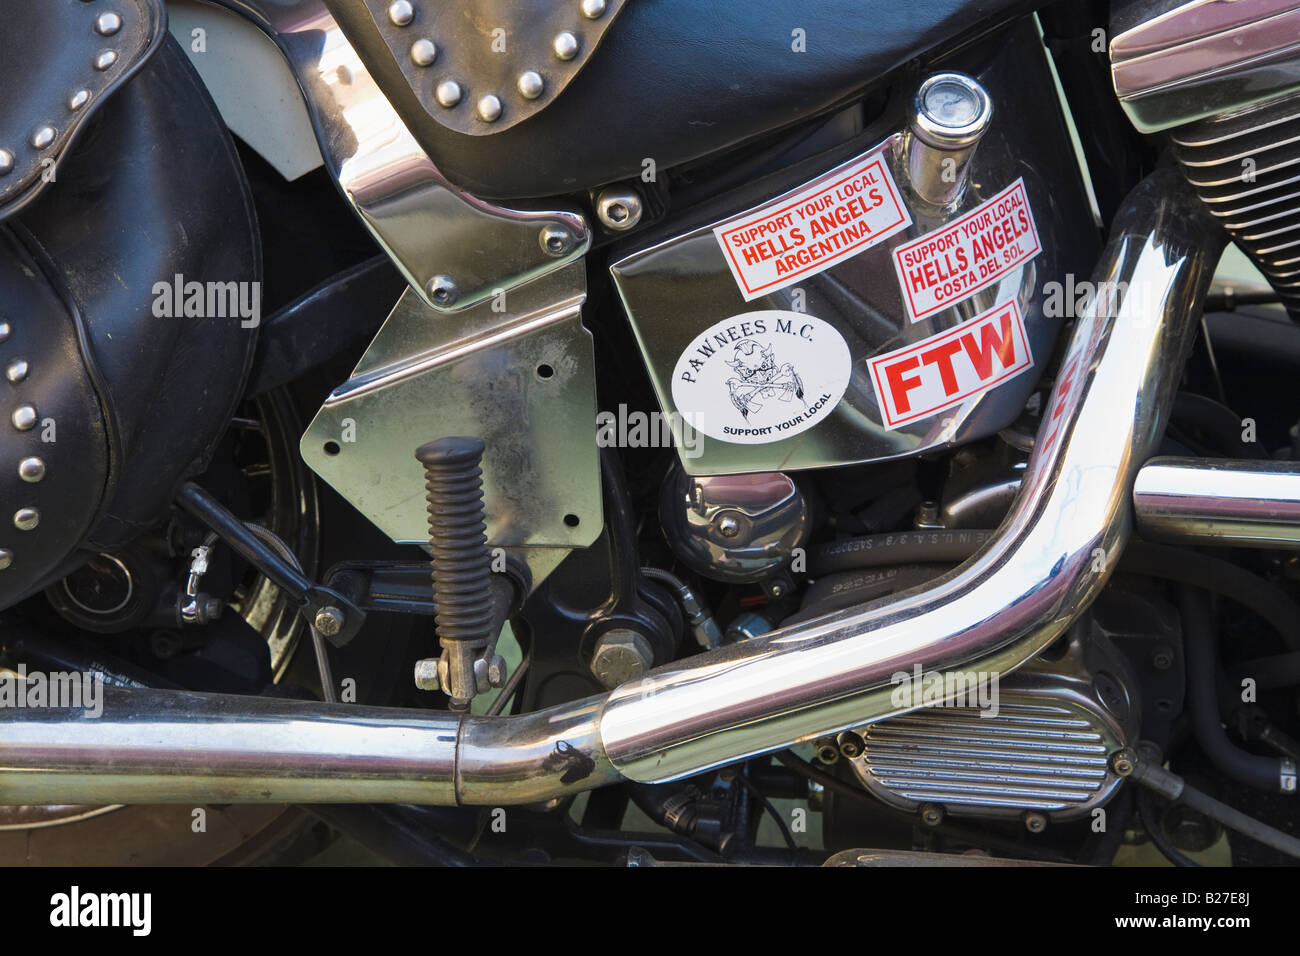 Harley Davidson Motorrad mit Hell s Angels club Aufkleber Stockfotografie -  Alamy